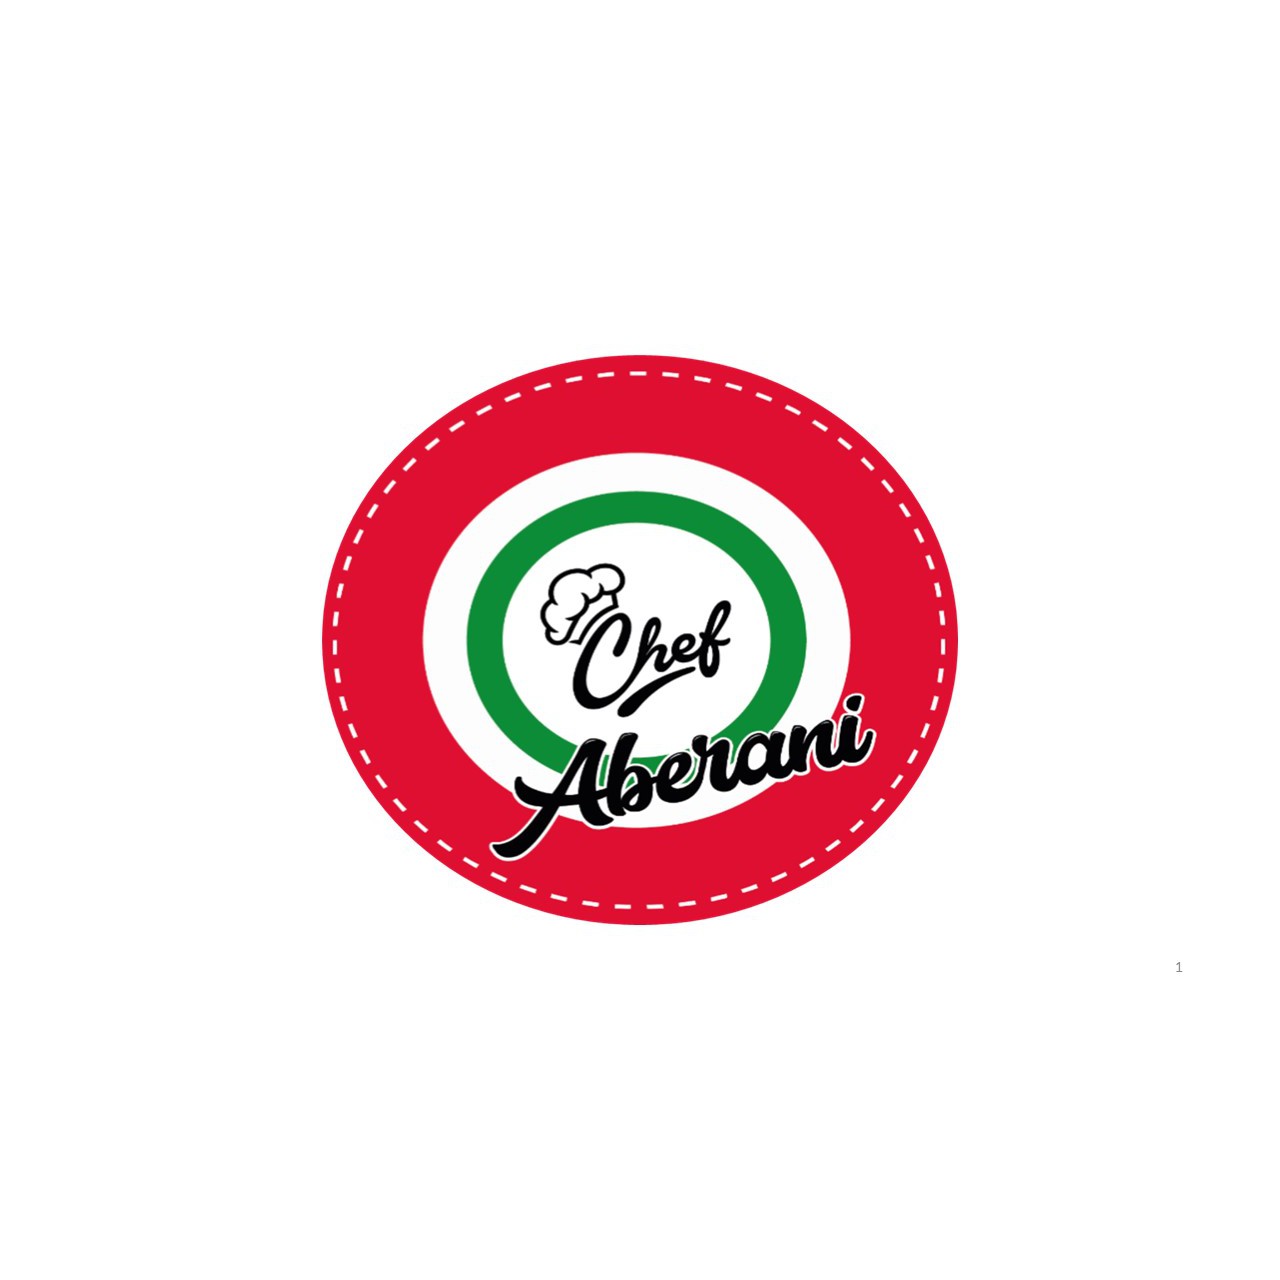 Chef Aberani Gastro Shop Restaurante Logo